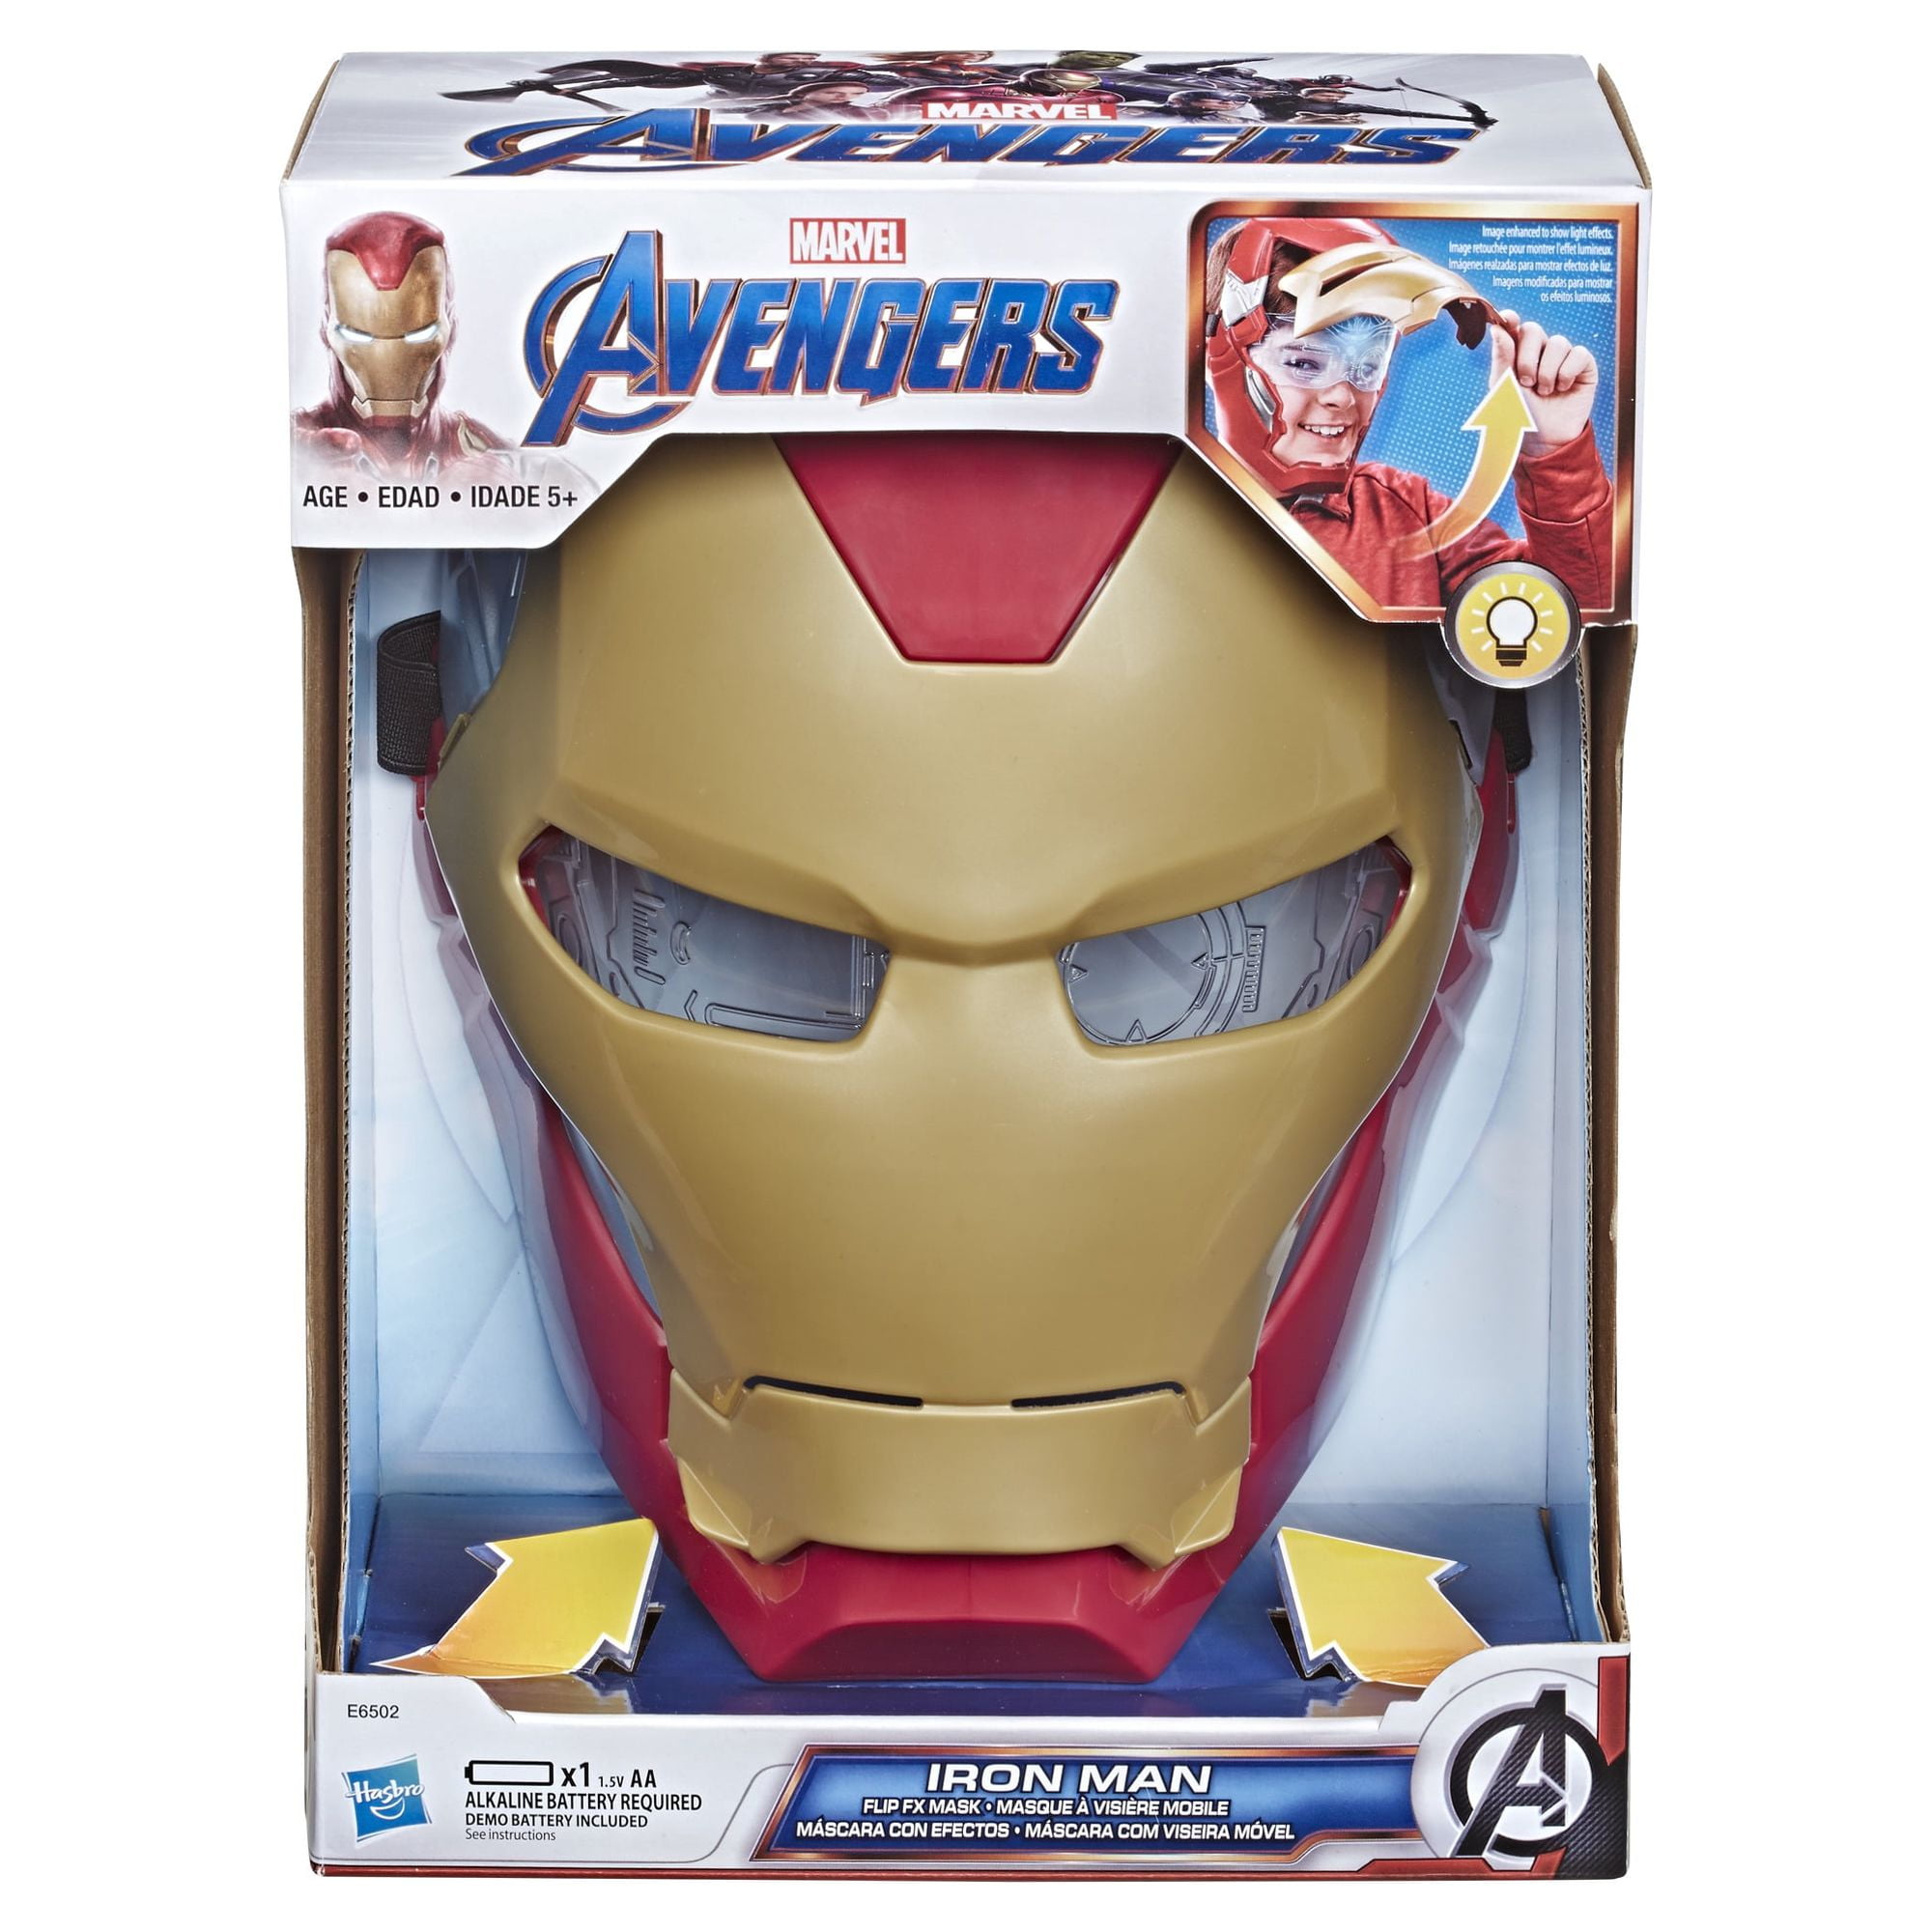 Marvel Avengers Iron Man Casque Cosplay, Masque Ironman LED